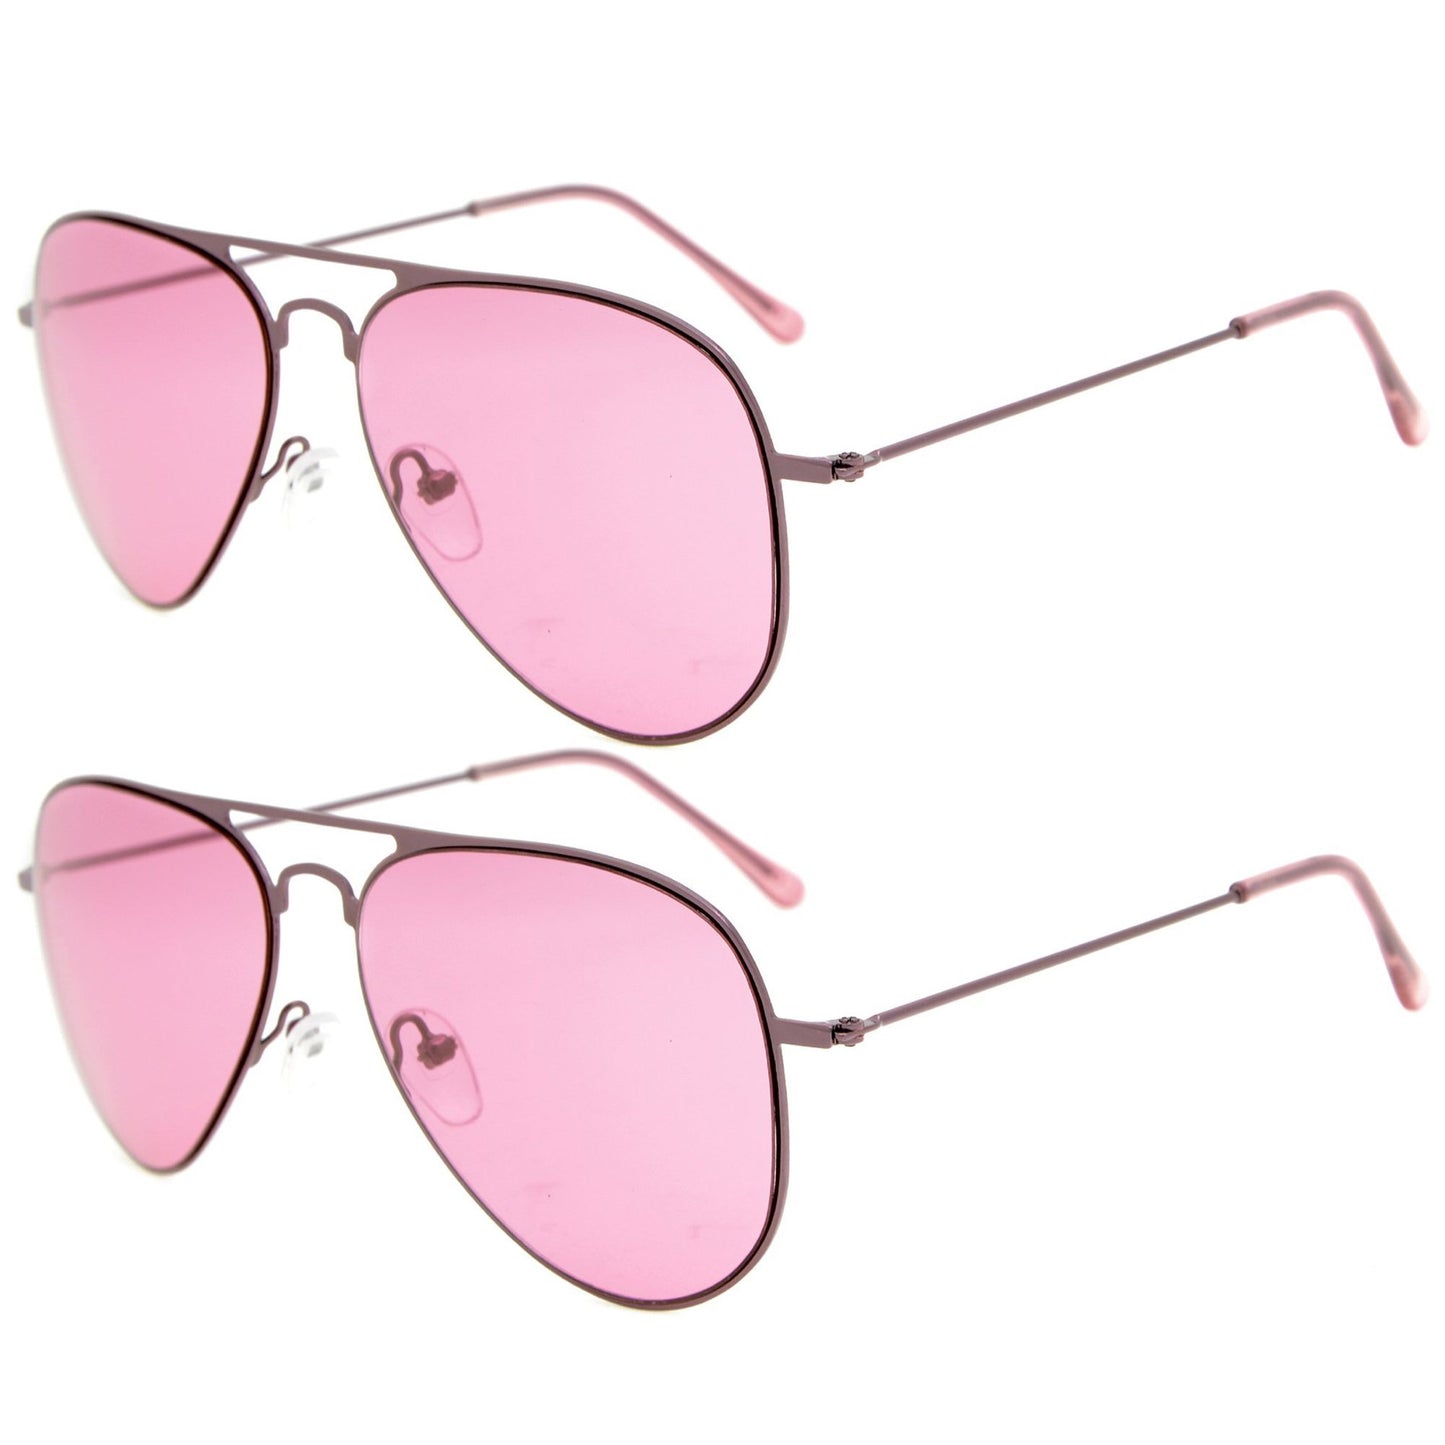 Stylish Sunglasses for Boys Girls Purple Lens S15018